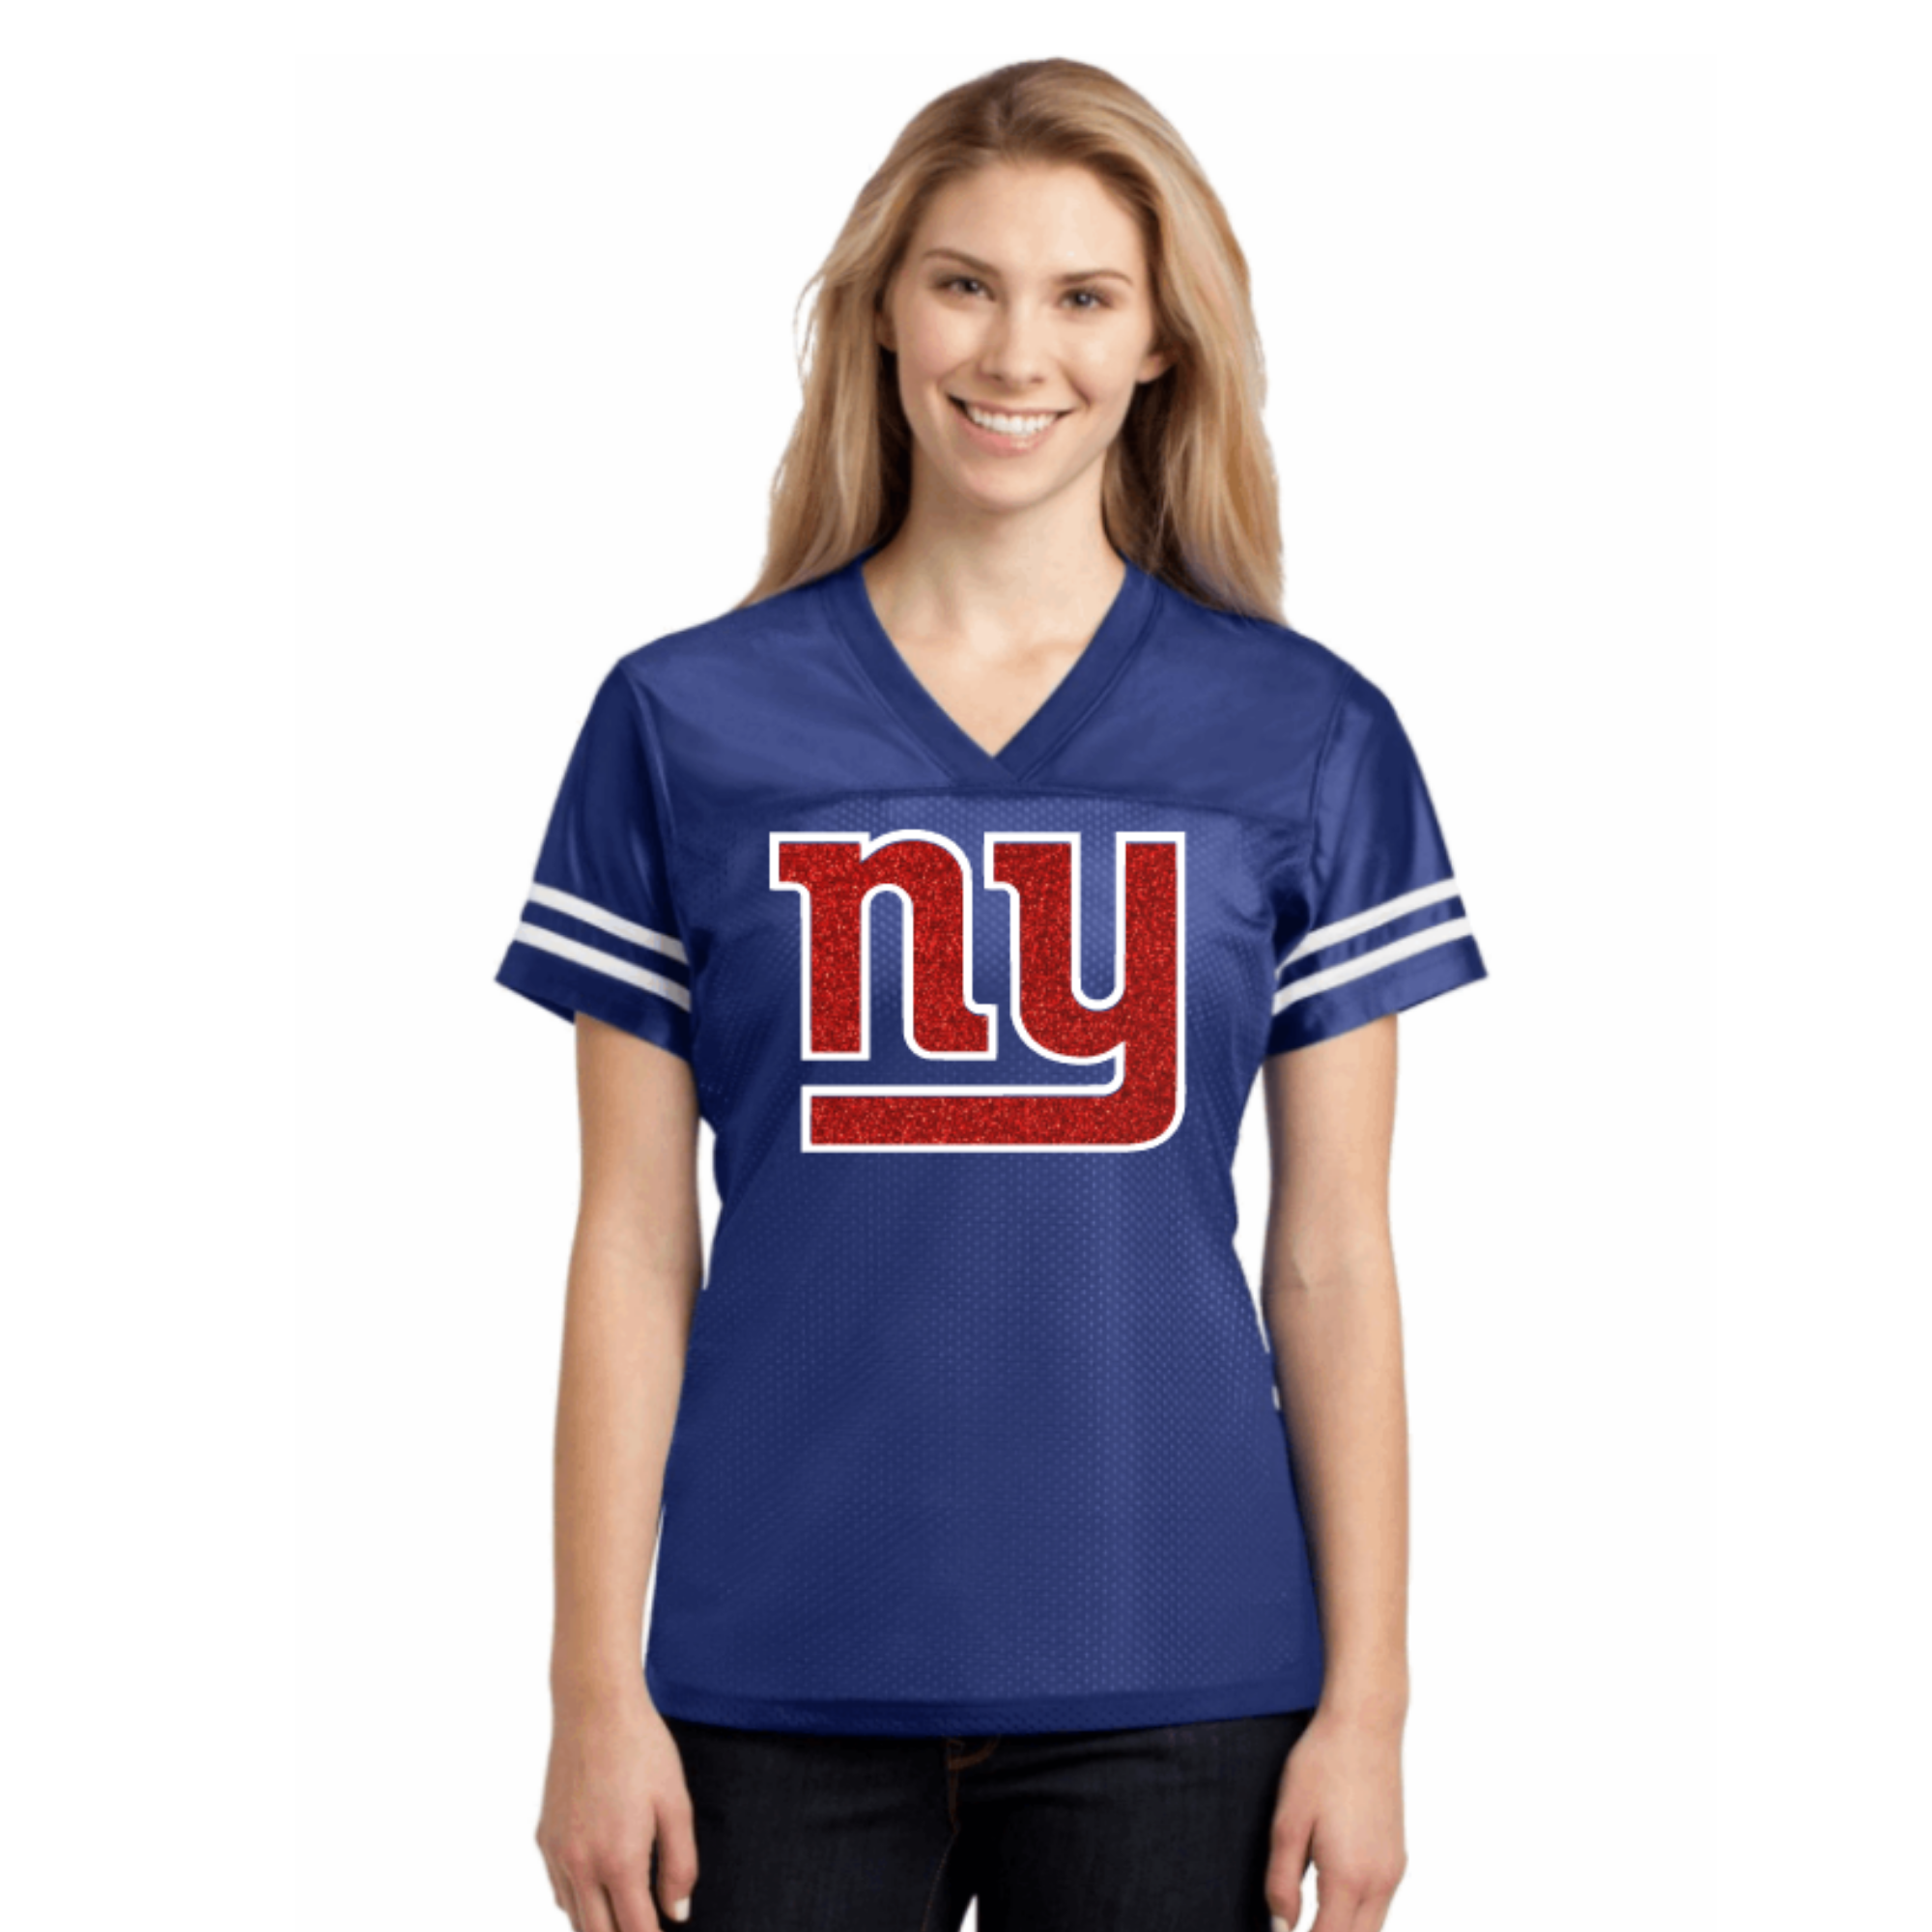 new york giants football shirts